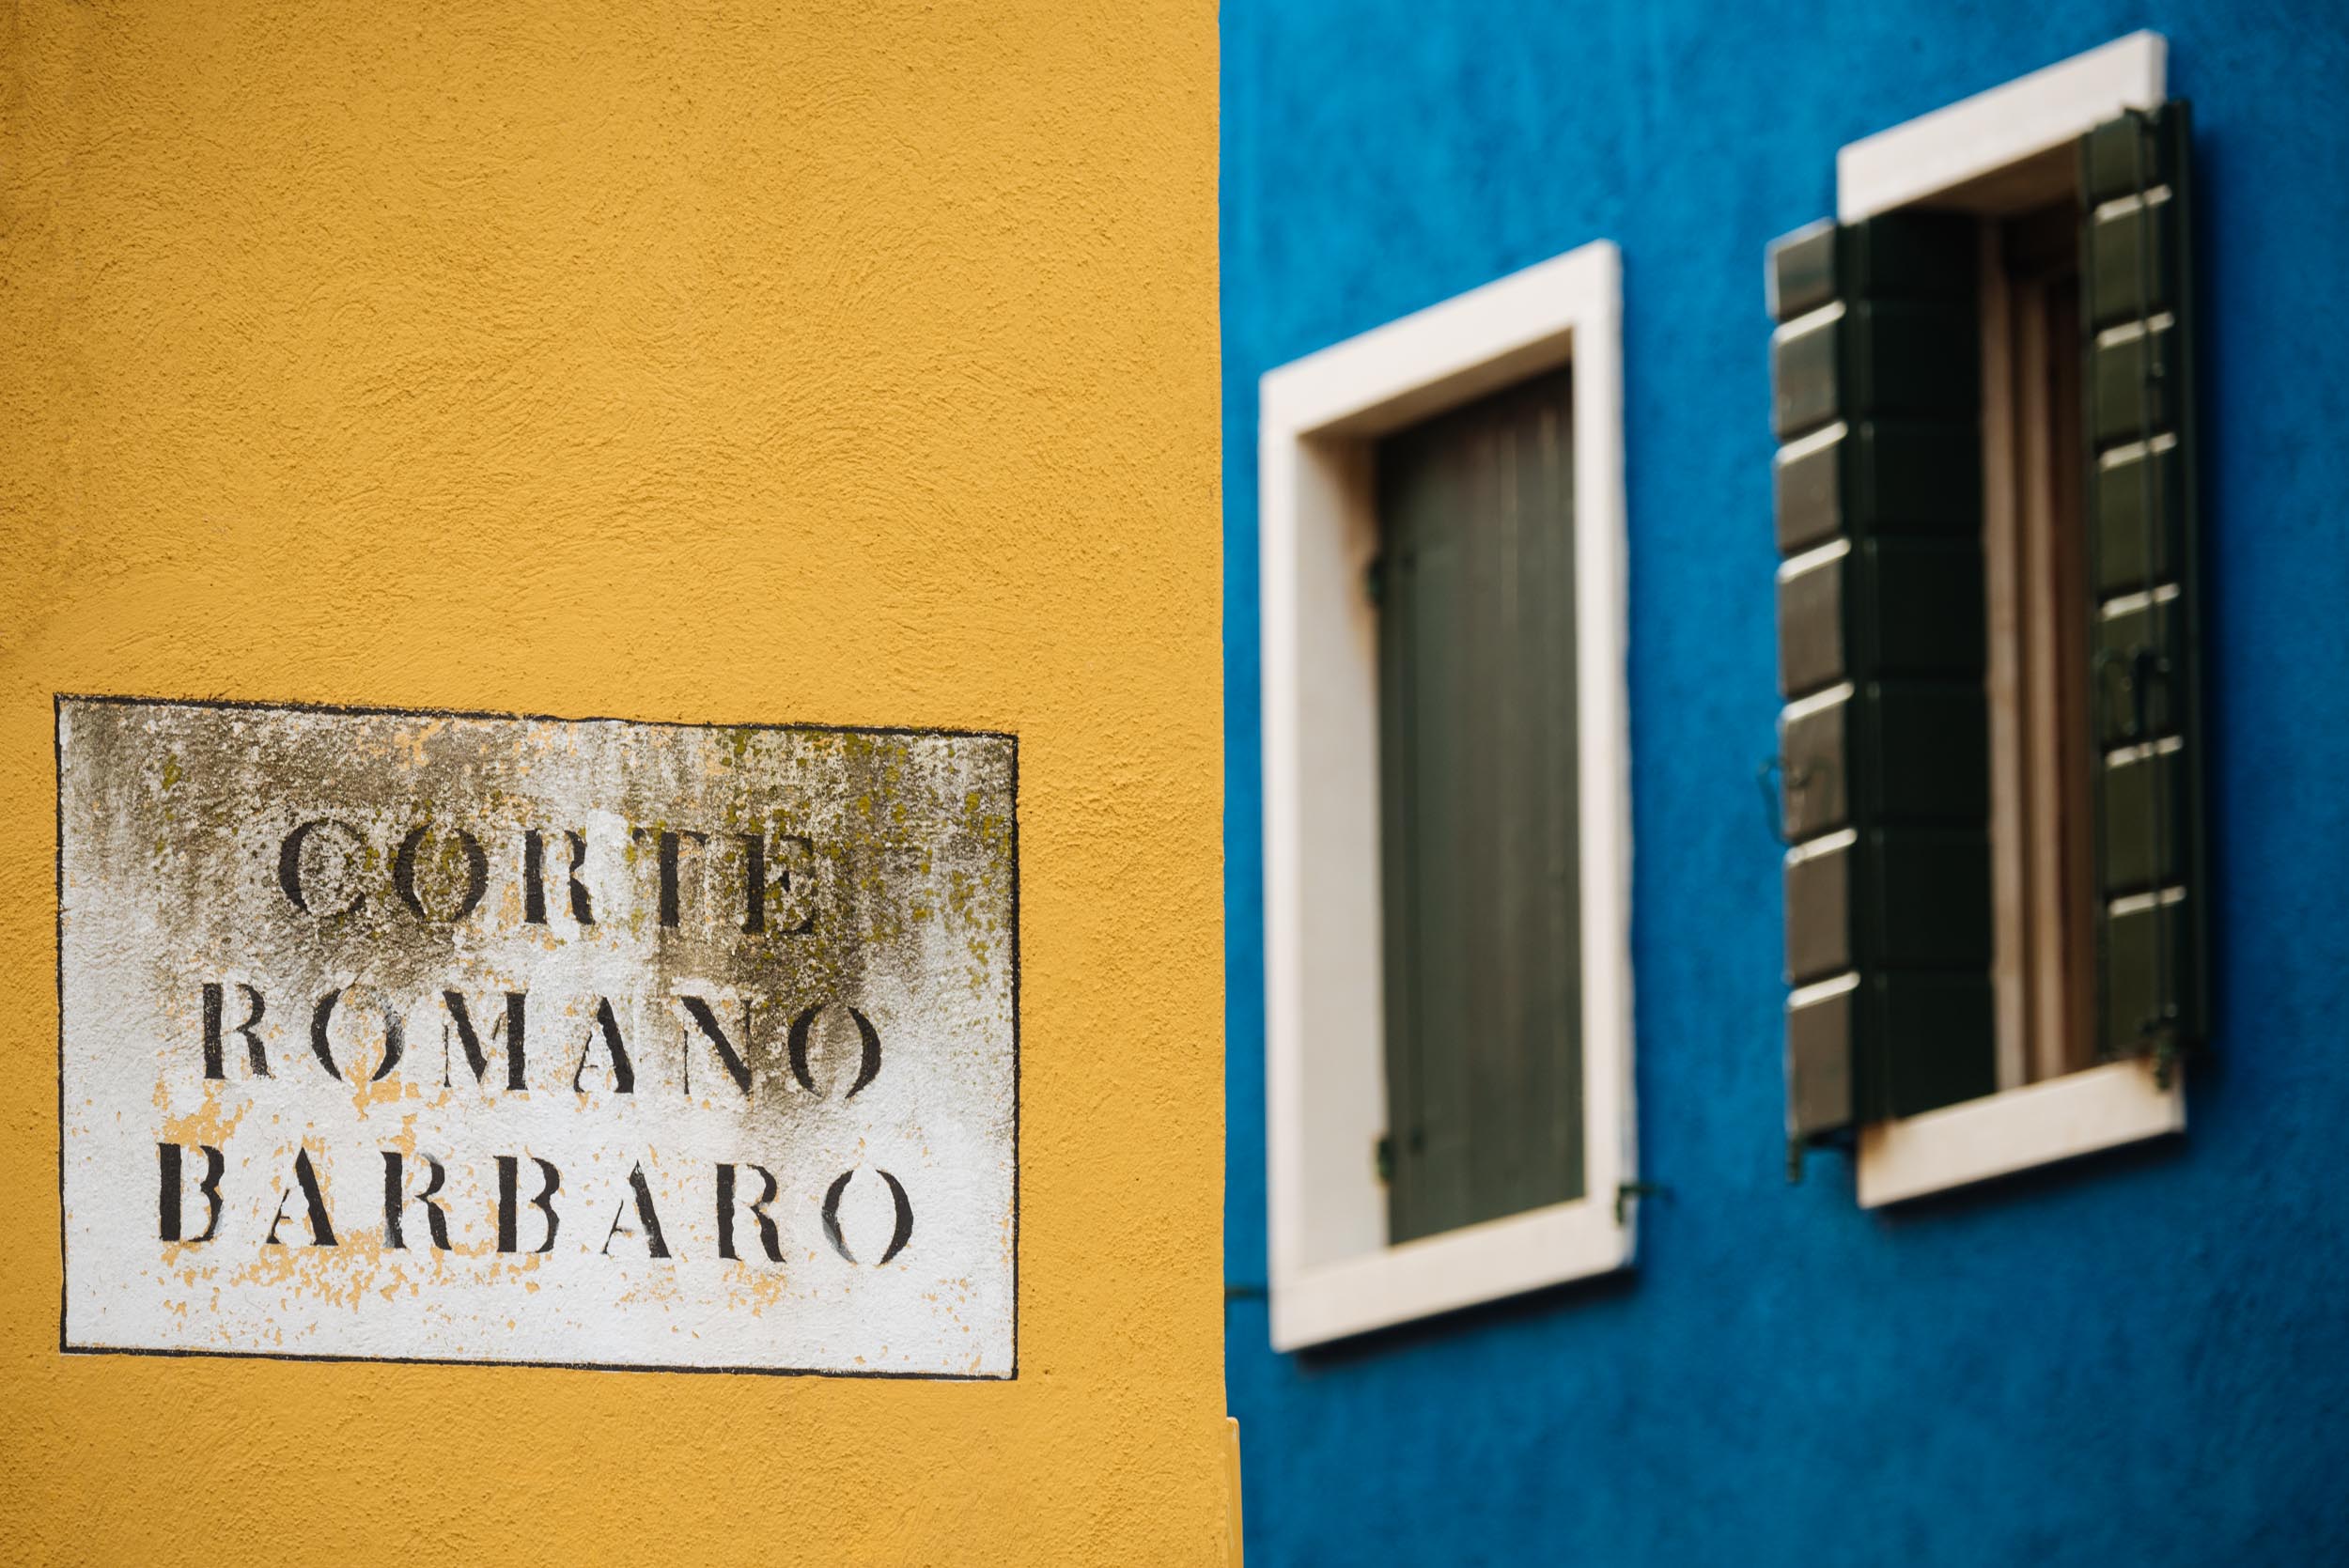 colour-building-detail-burano-italy-veneto-sign